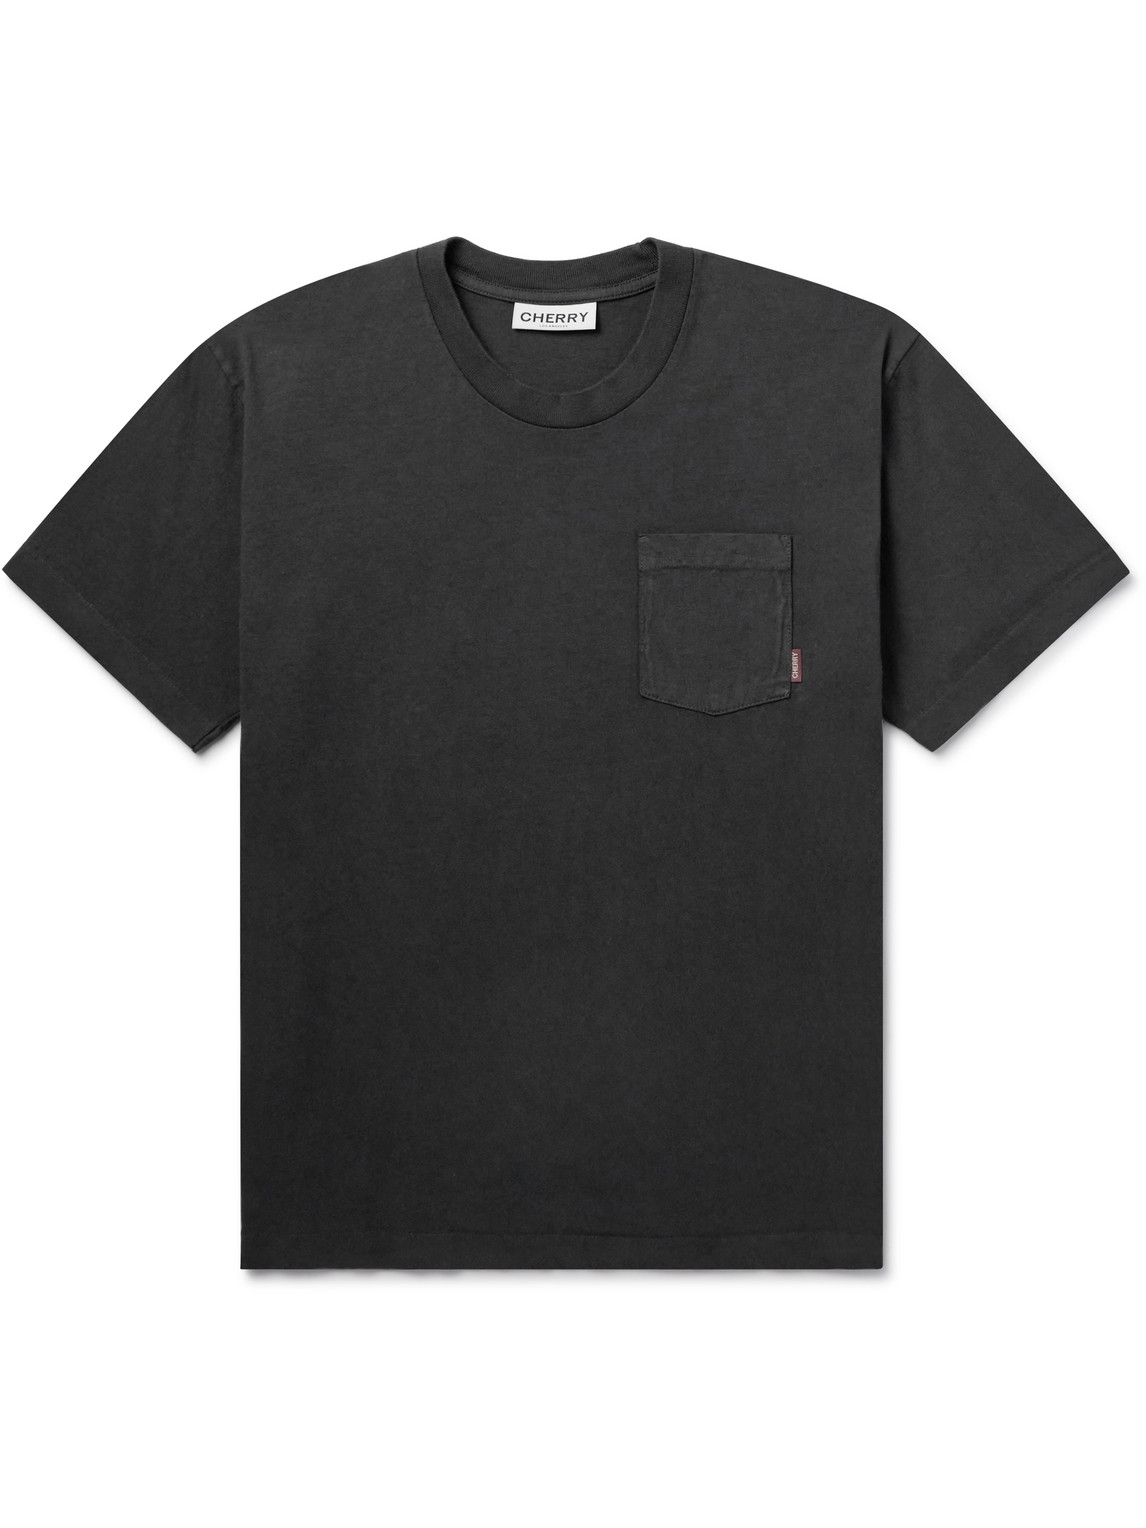 Cherry Los Angeles - Logo-Appliquéd Garment-Dyed Cotton-Jersey T-Shirt - Men - Black - M von Cherry Los Angeles